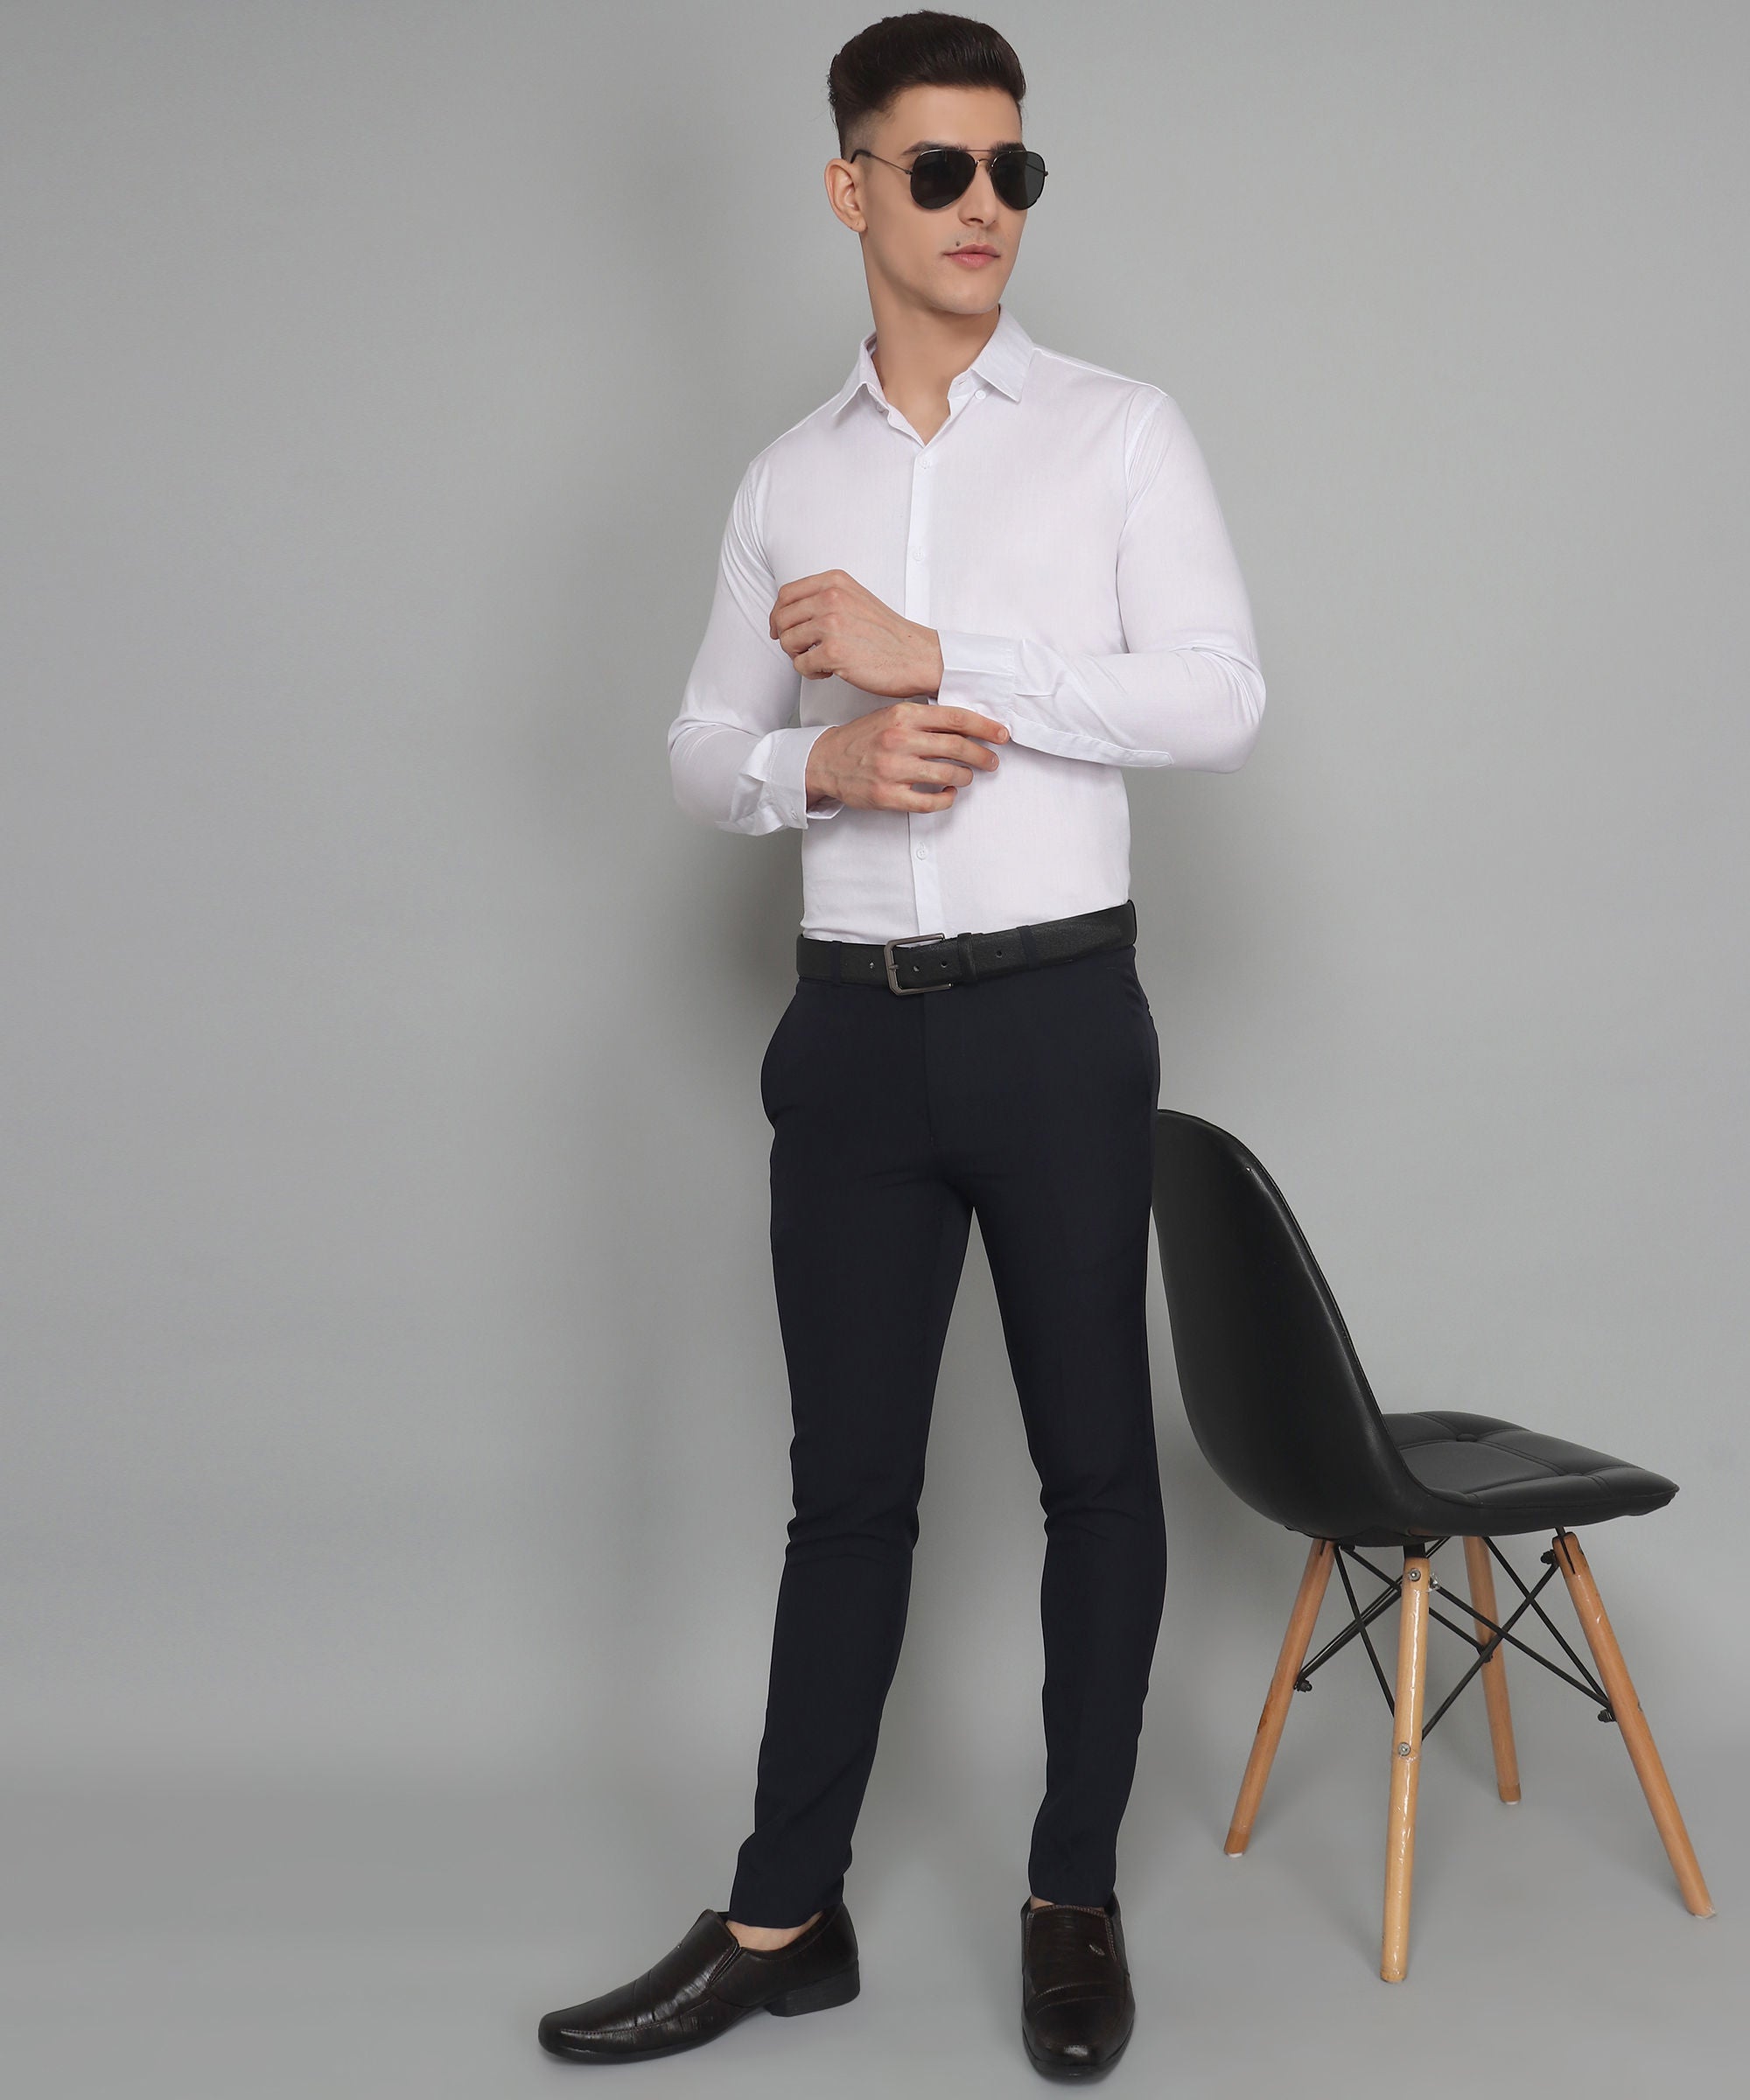 Exclusive TryBuy Premium White Dress Shirt for Men